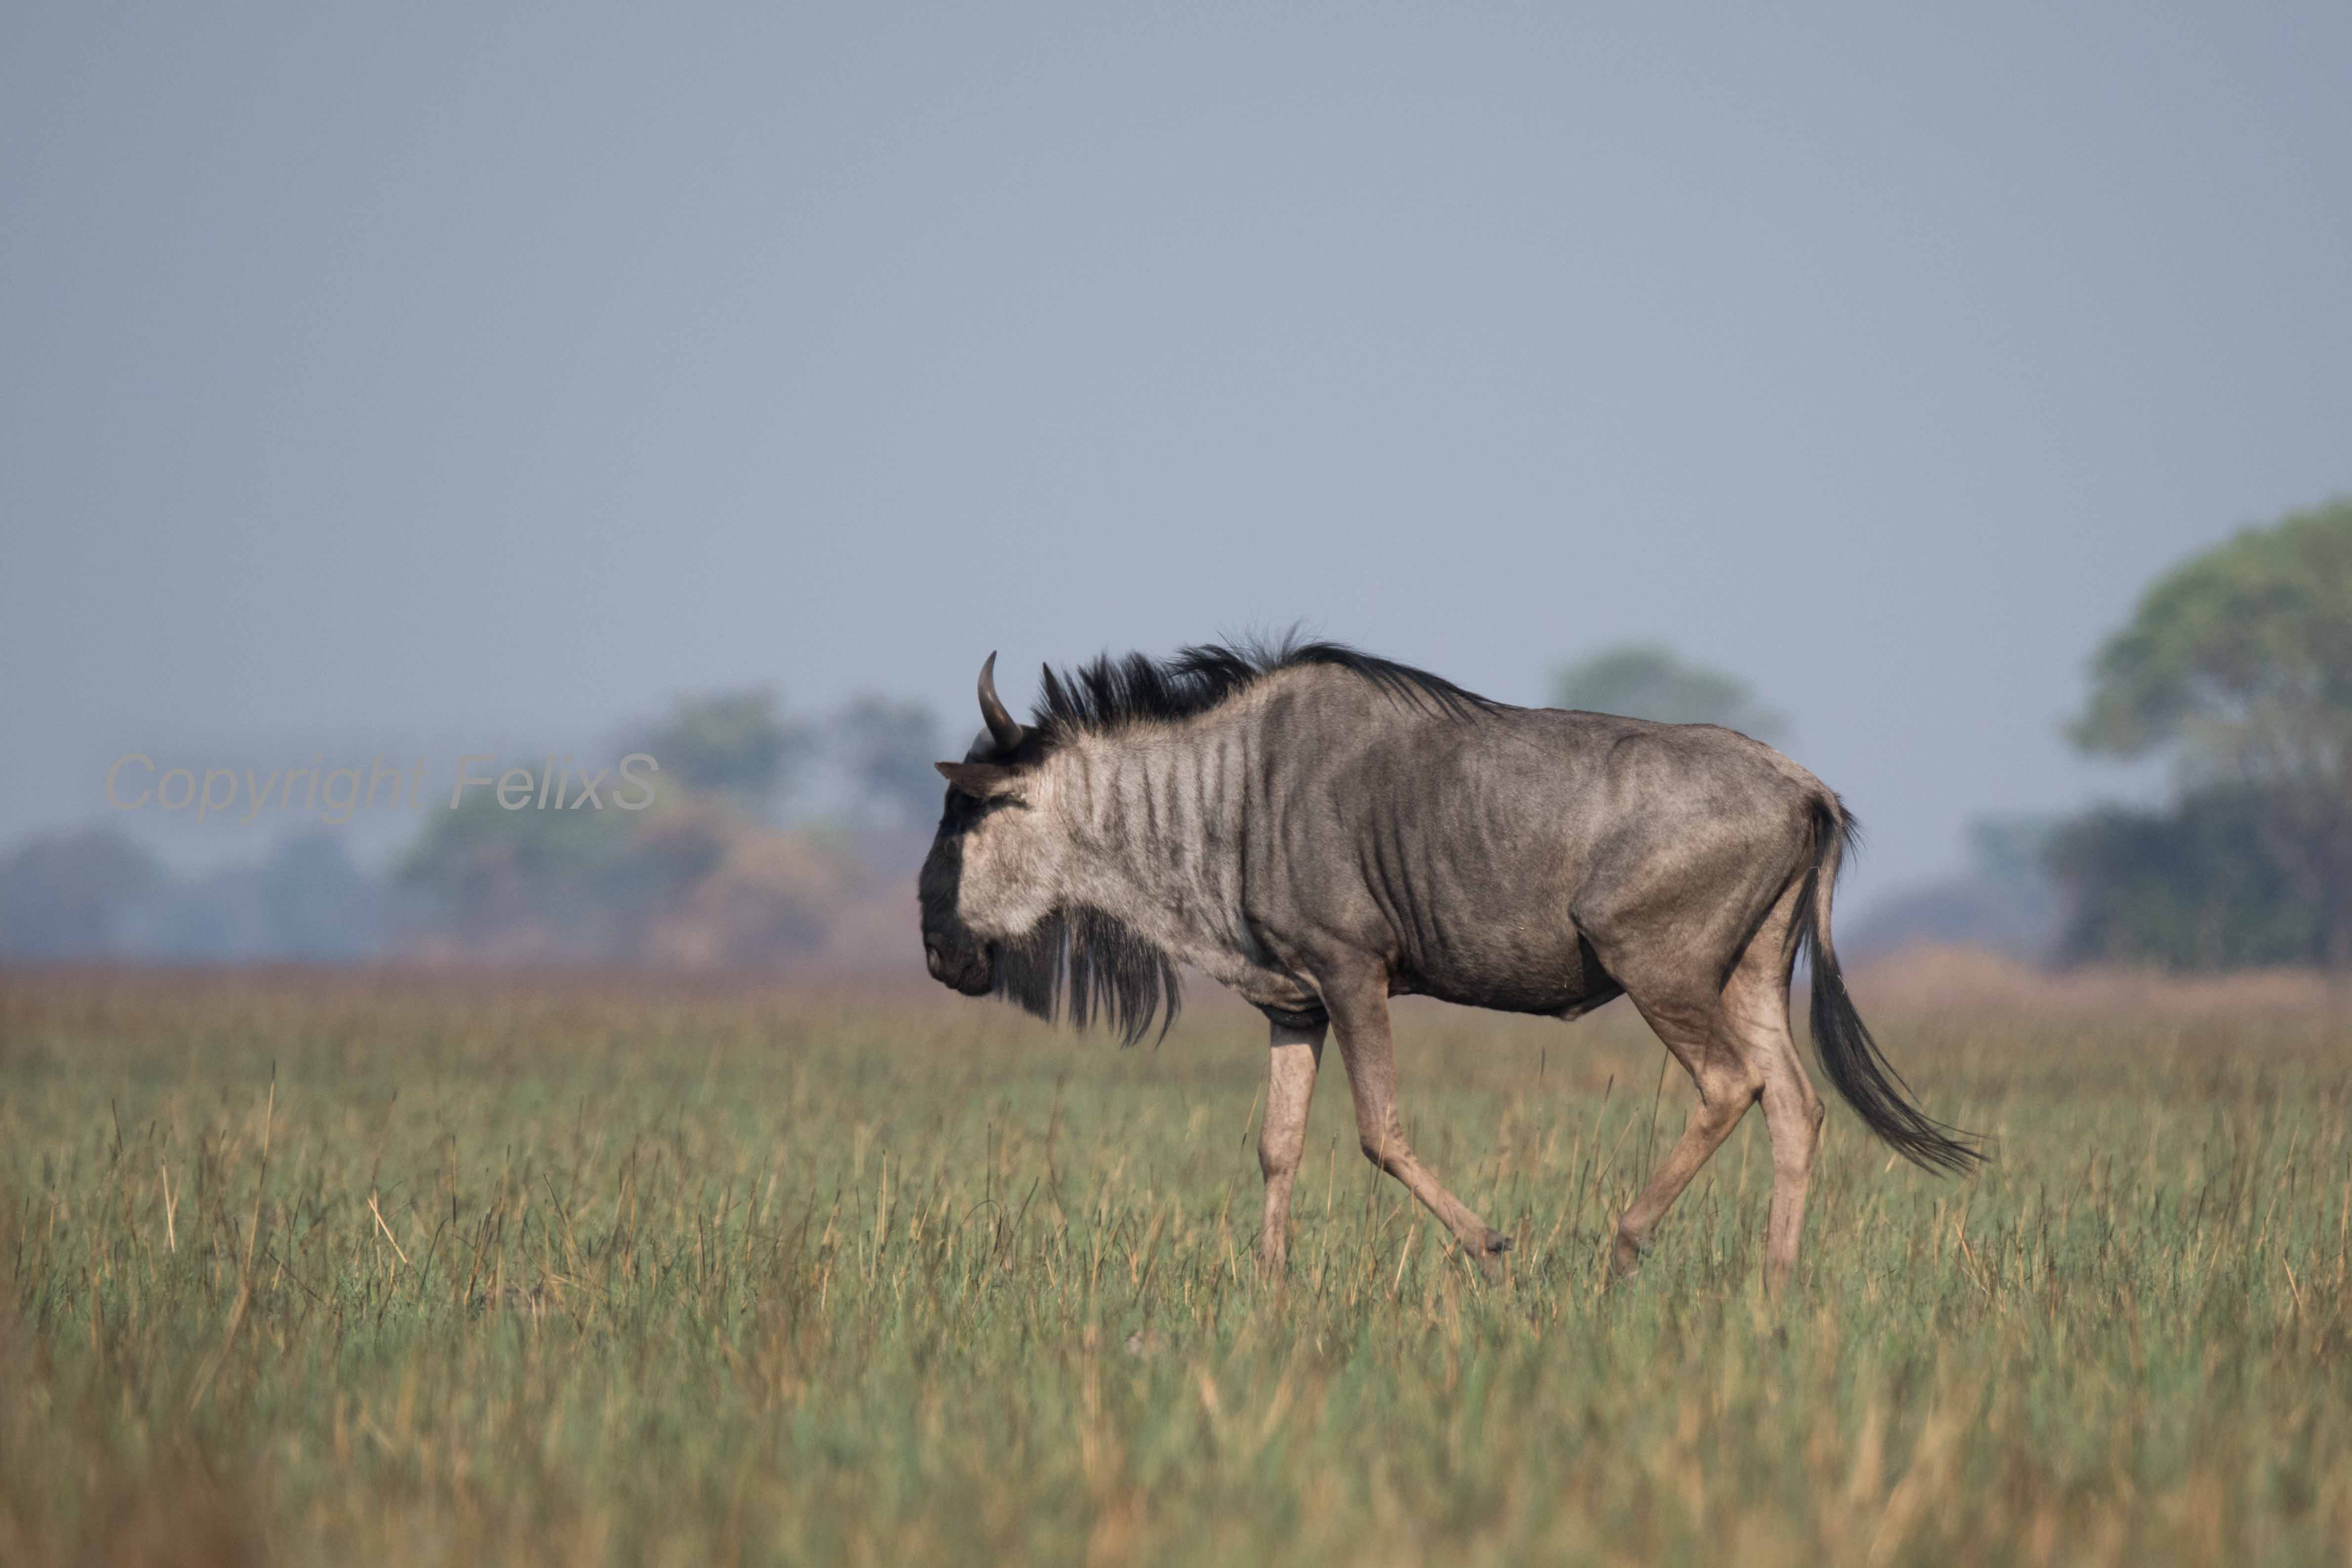 Busanga plains wildebeest